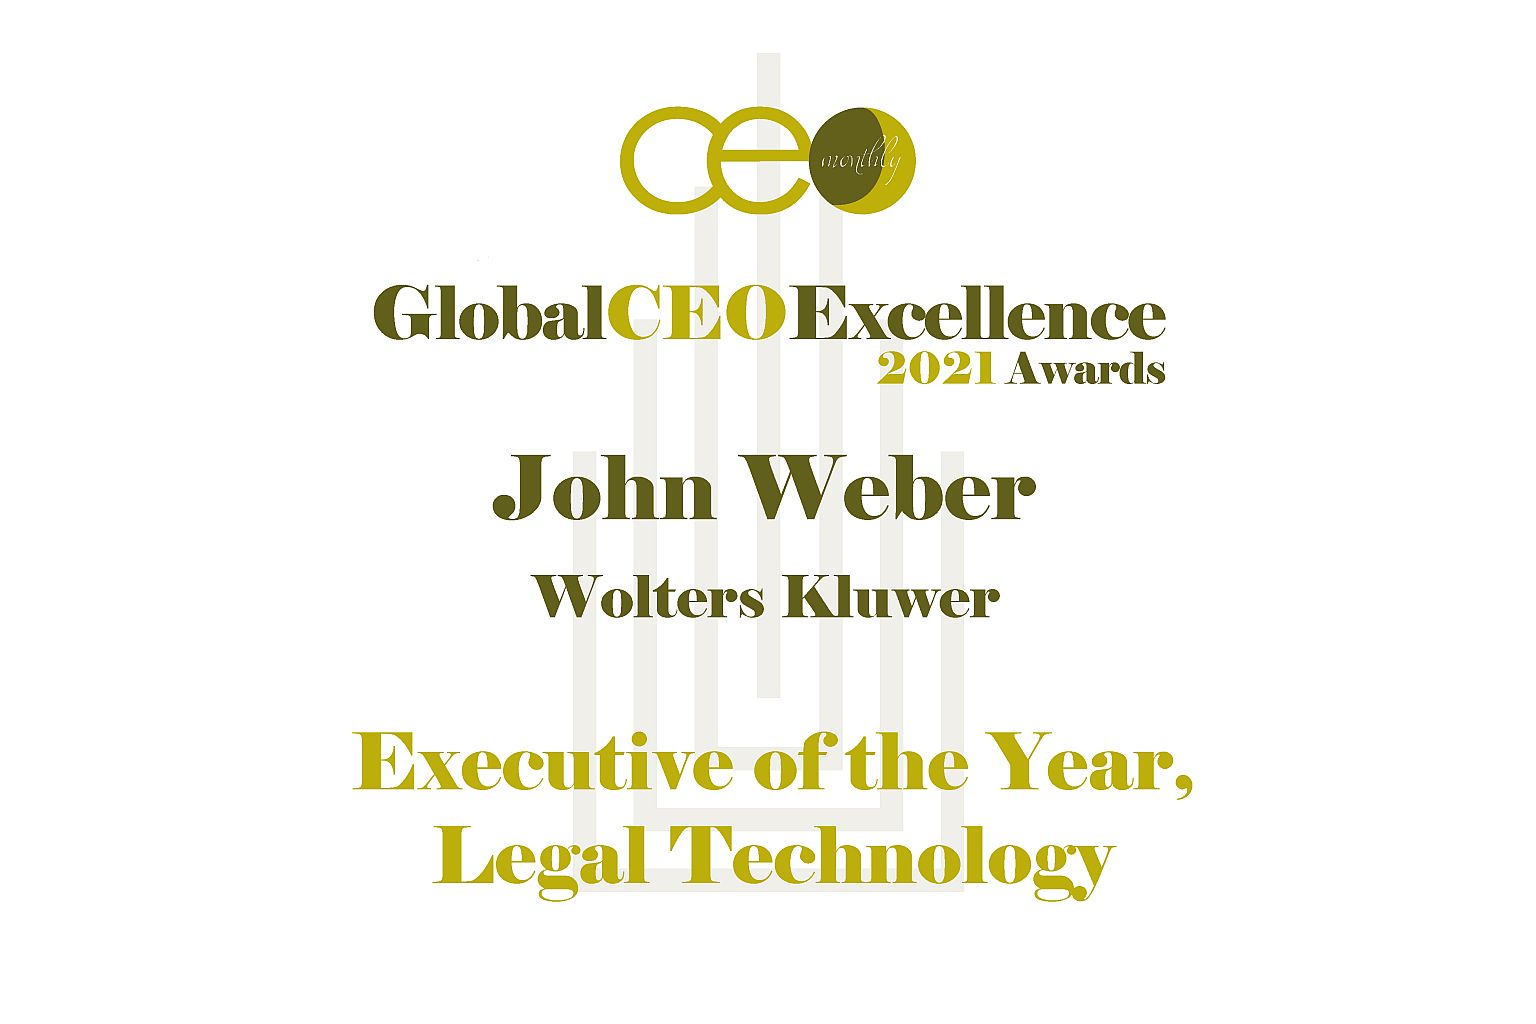 John Weber named Executive of the Year